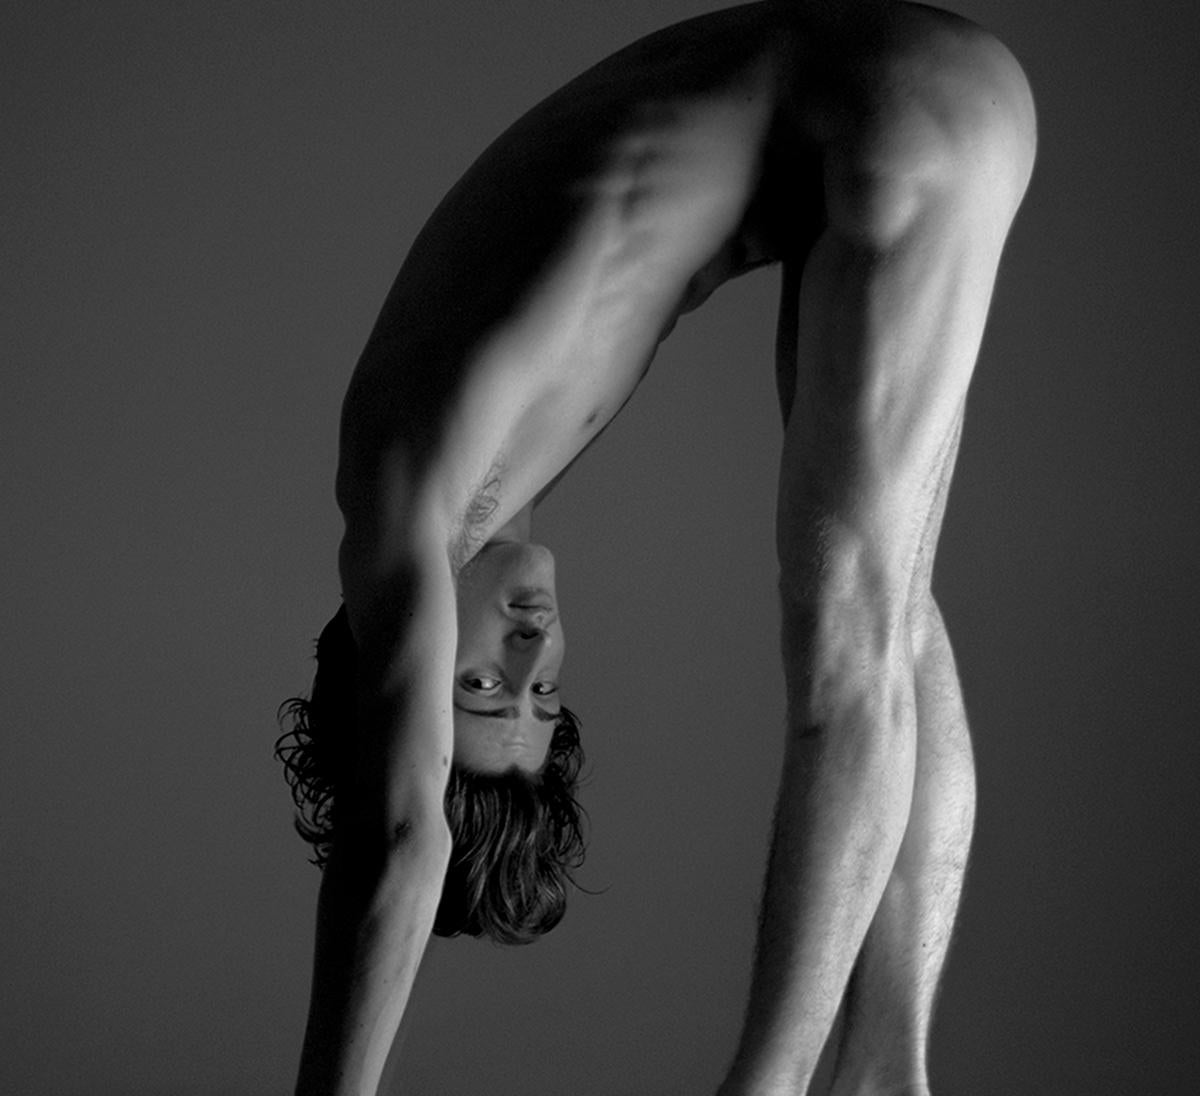 Bailarin I. The Bailarín, series. Male Nude dancer. Black & White photograph - Photograph by Ricky Cohete